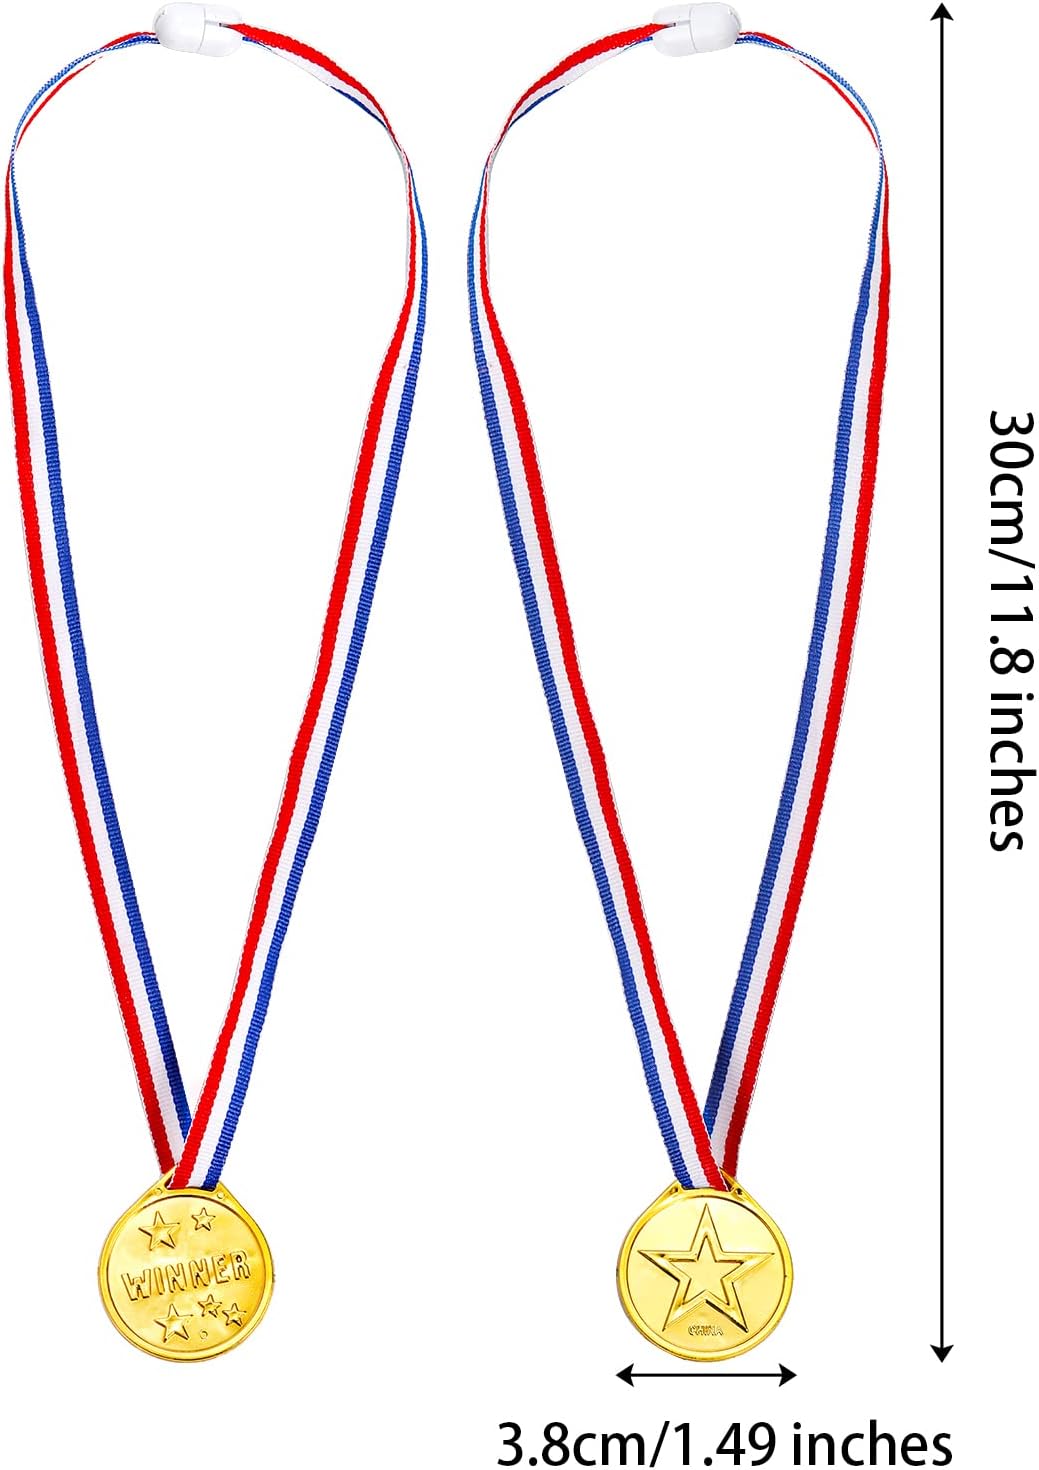 Accomplishement Medals